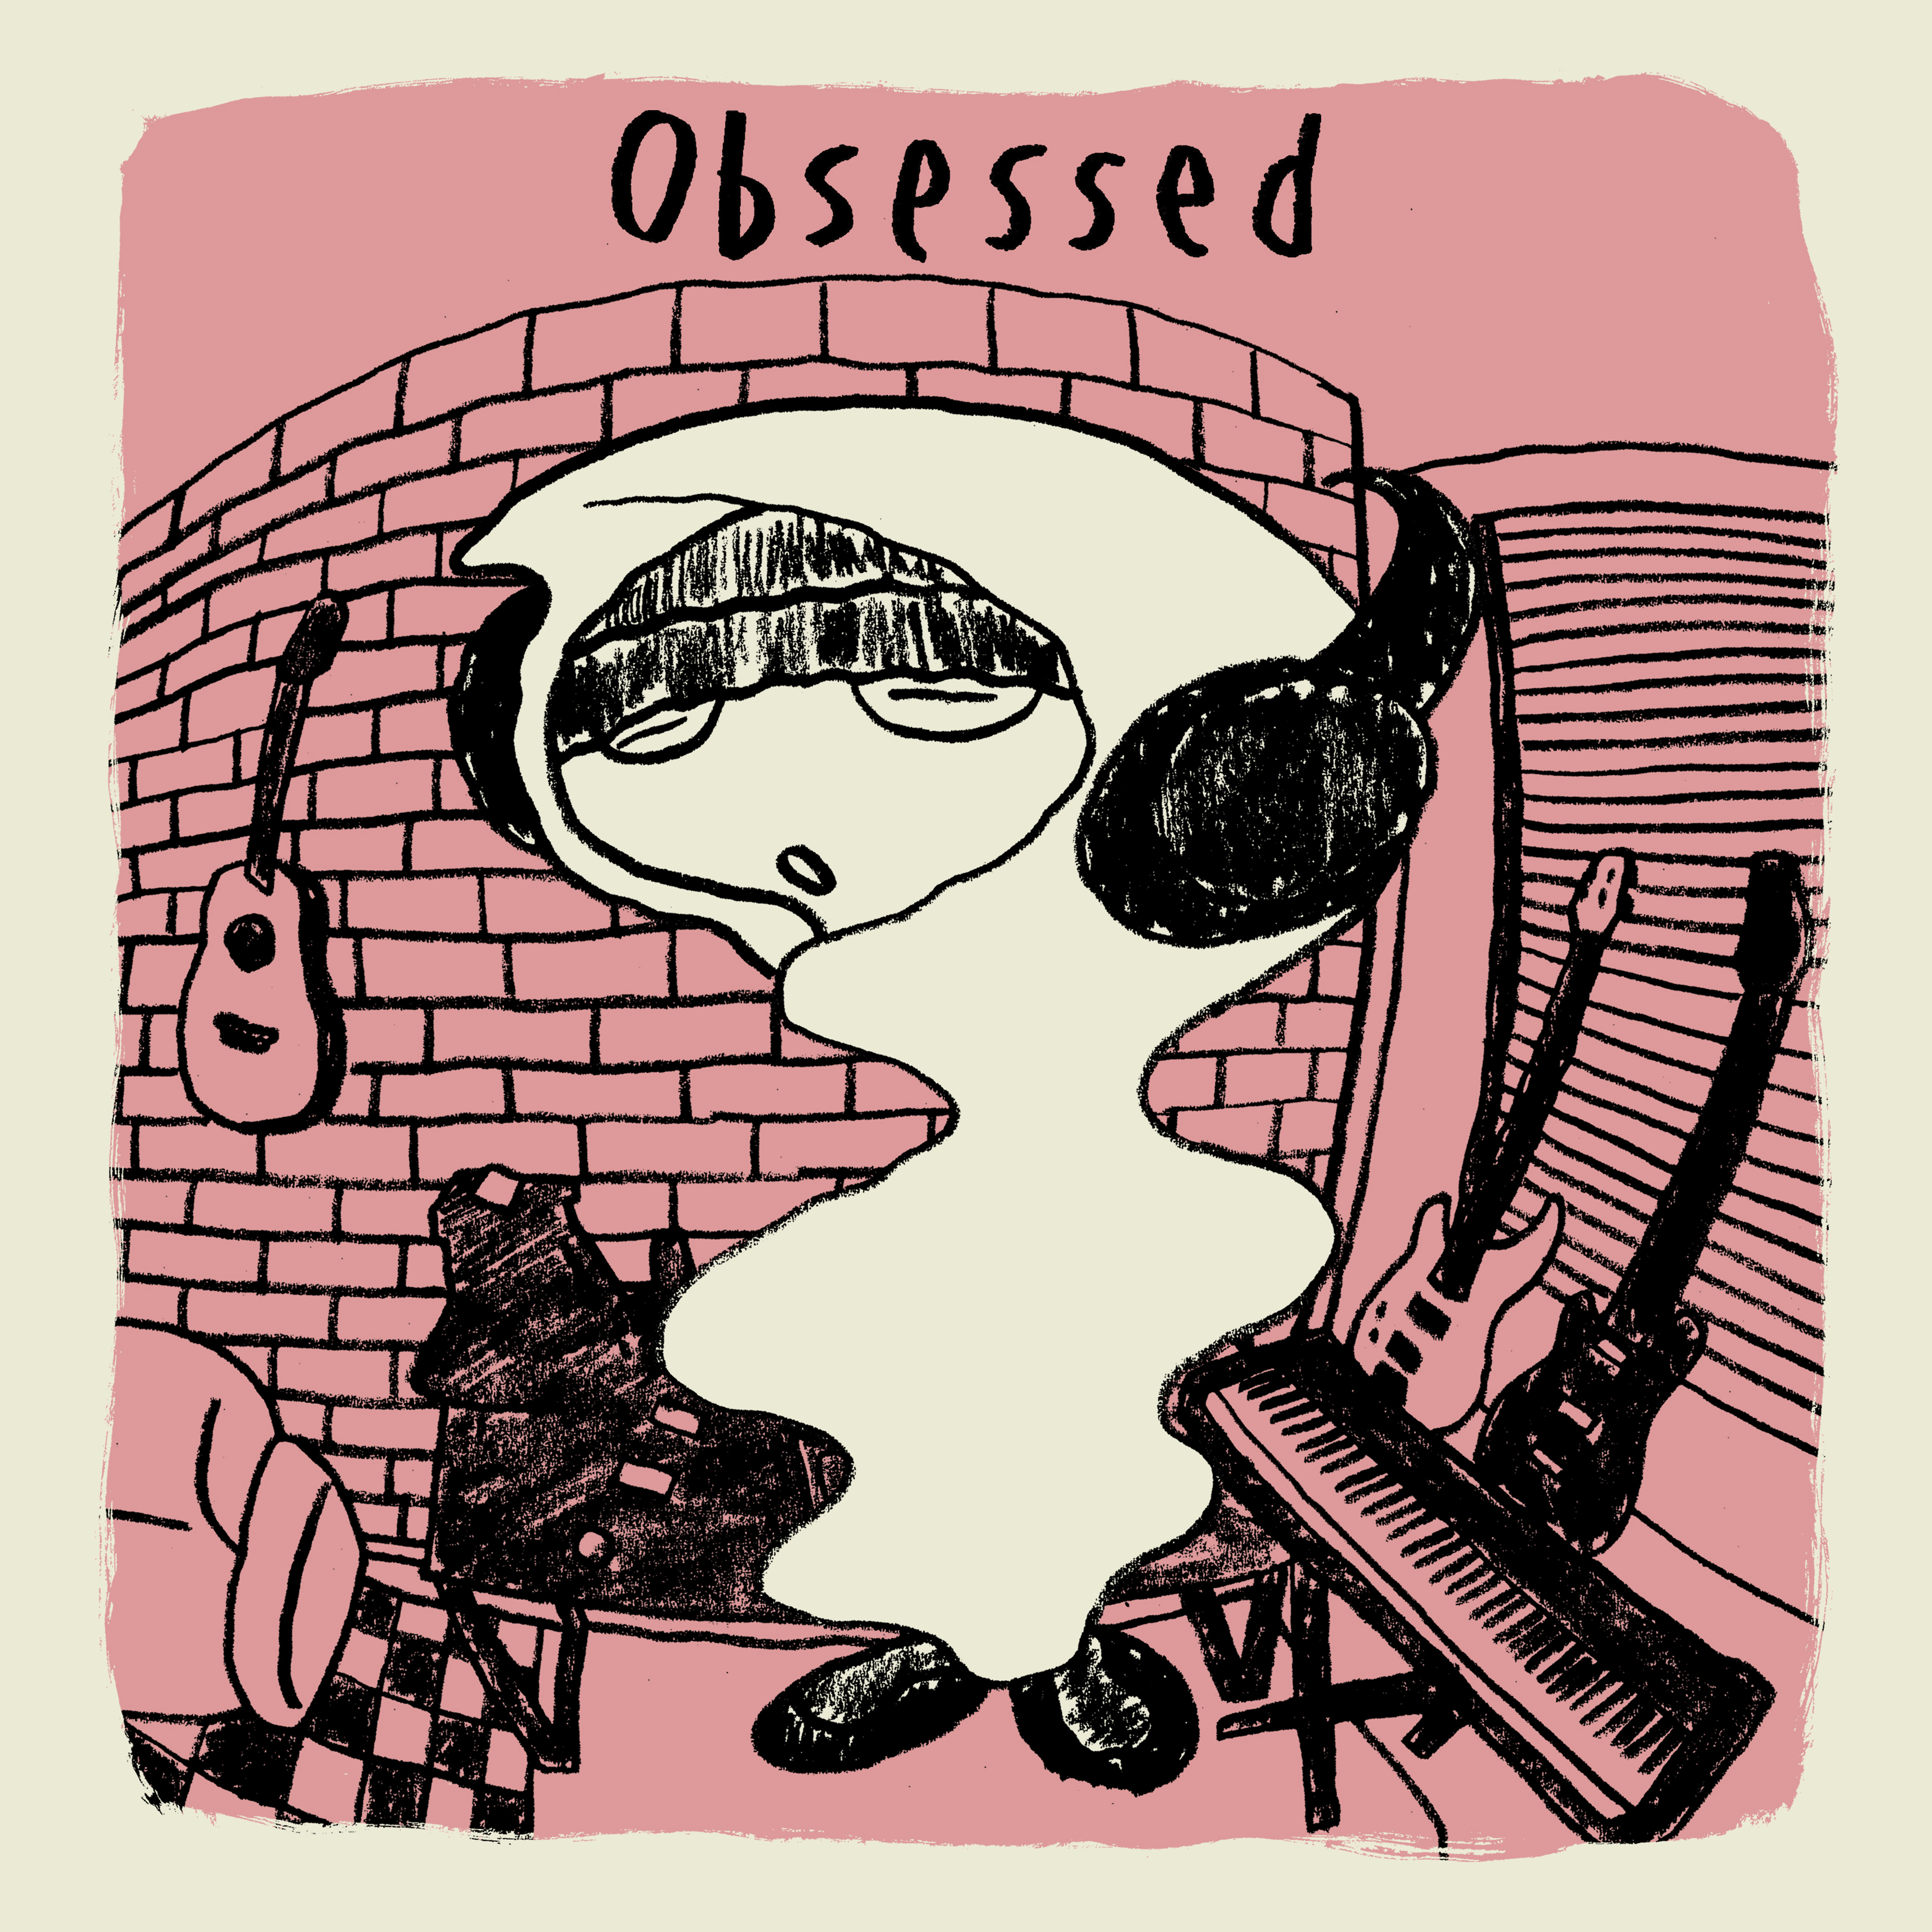 Obsessed 가사 해석, Ayumu Imazu Obsessed (인스타 스토리 음악)